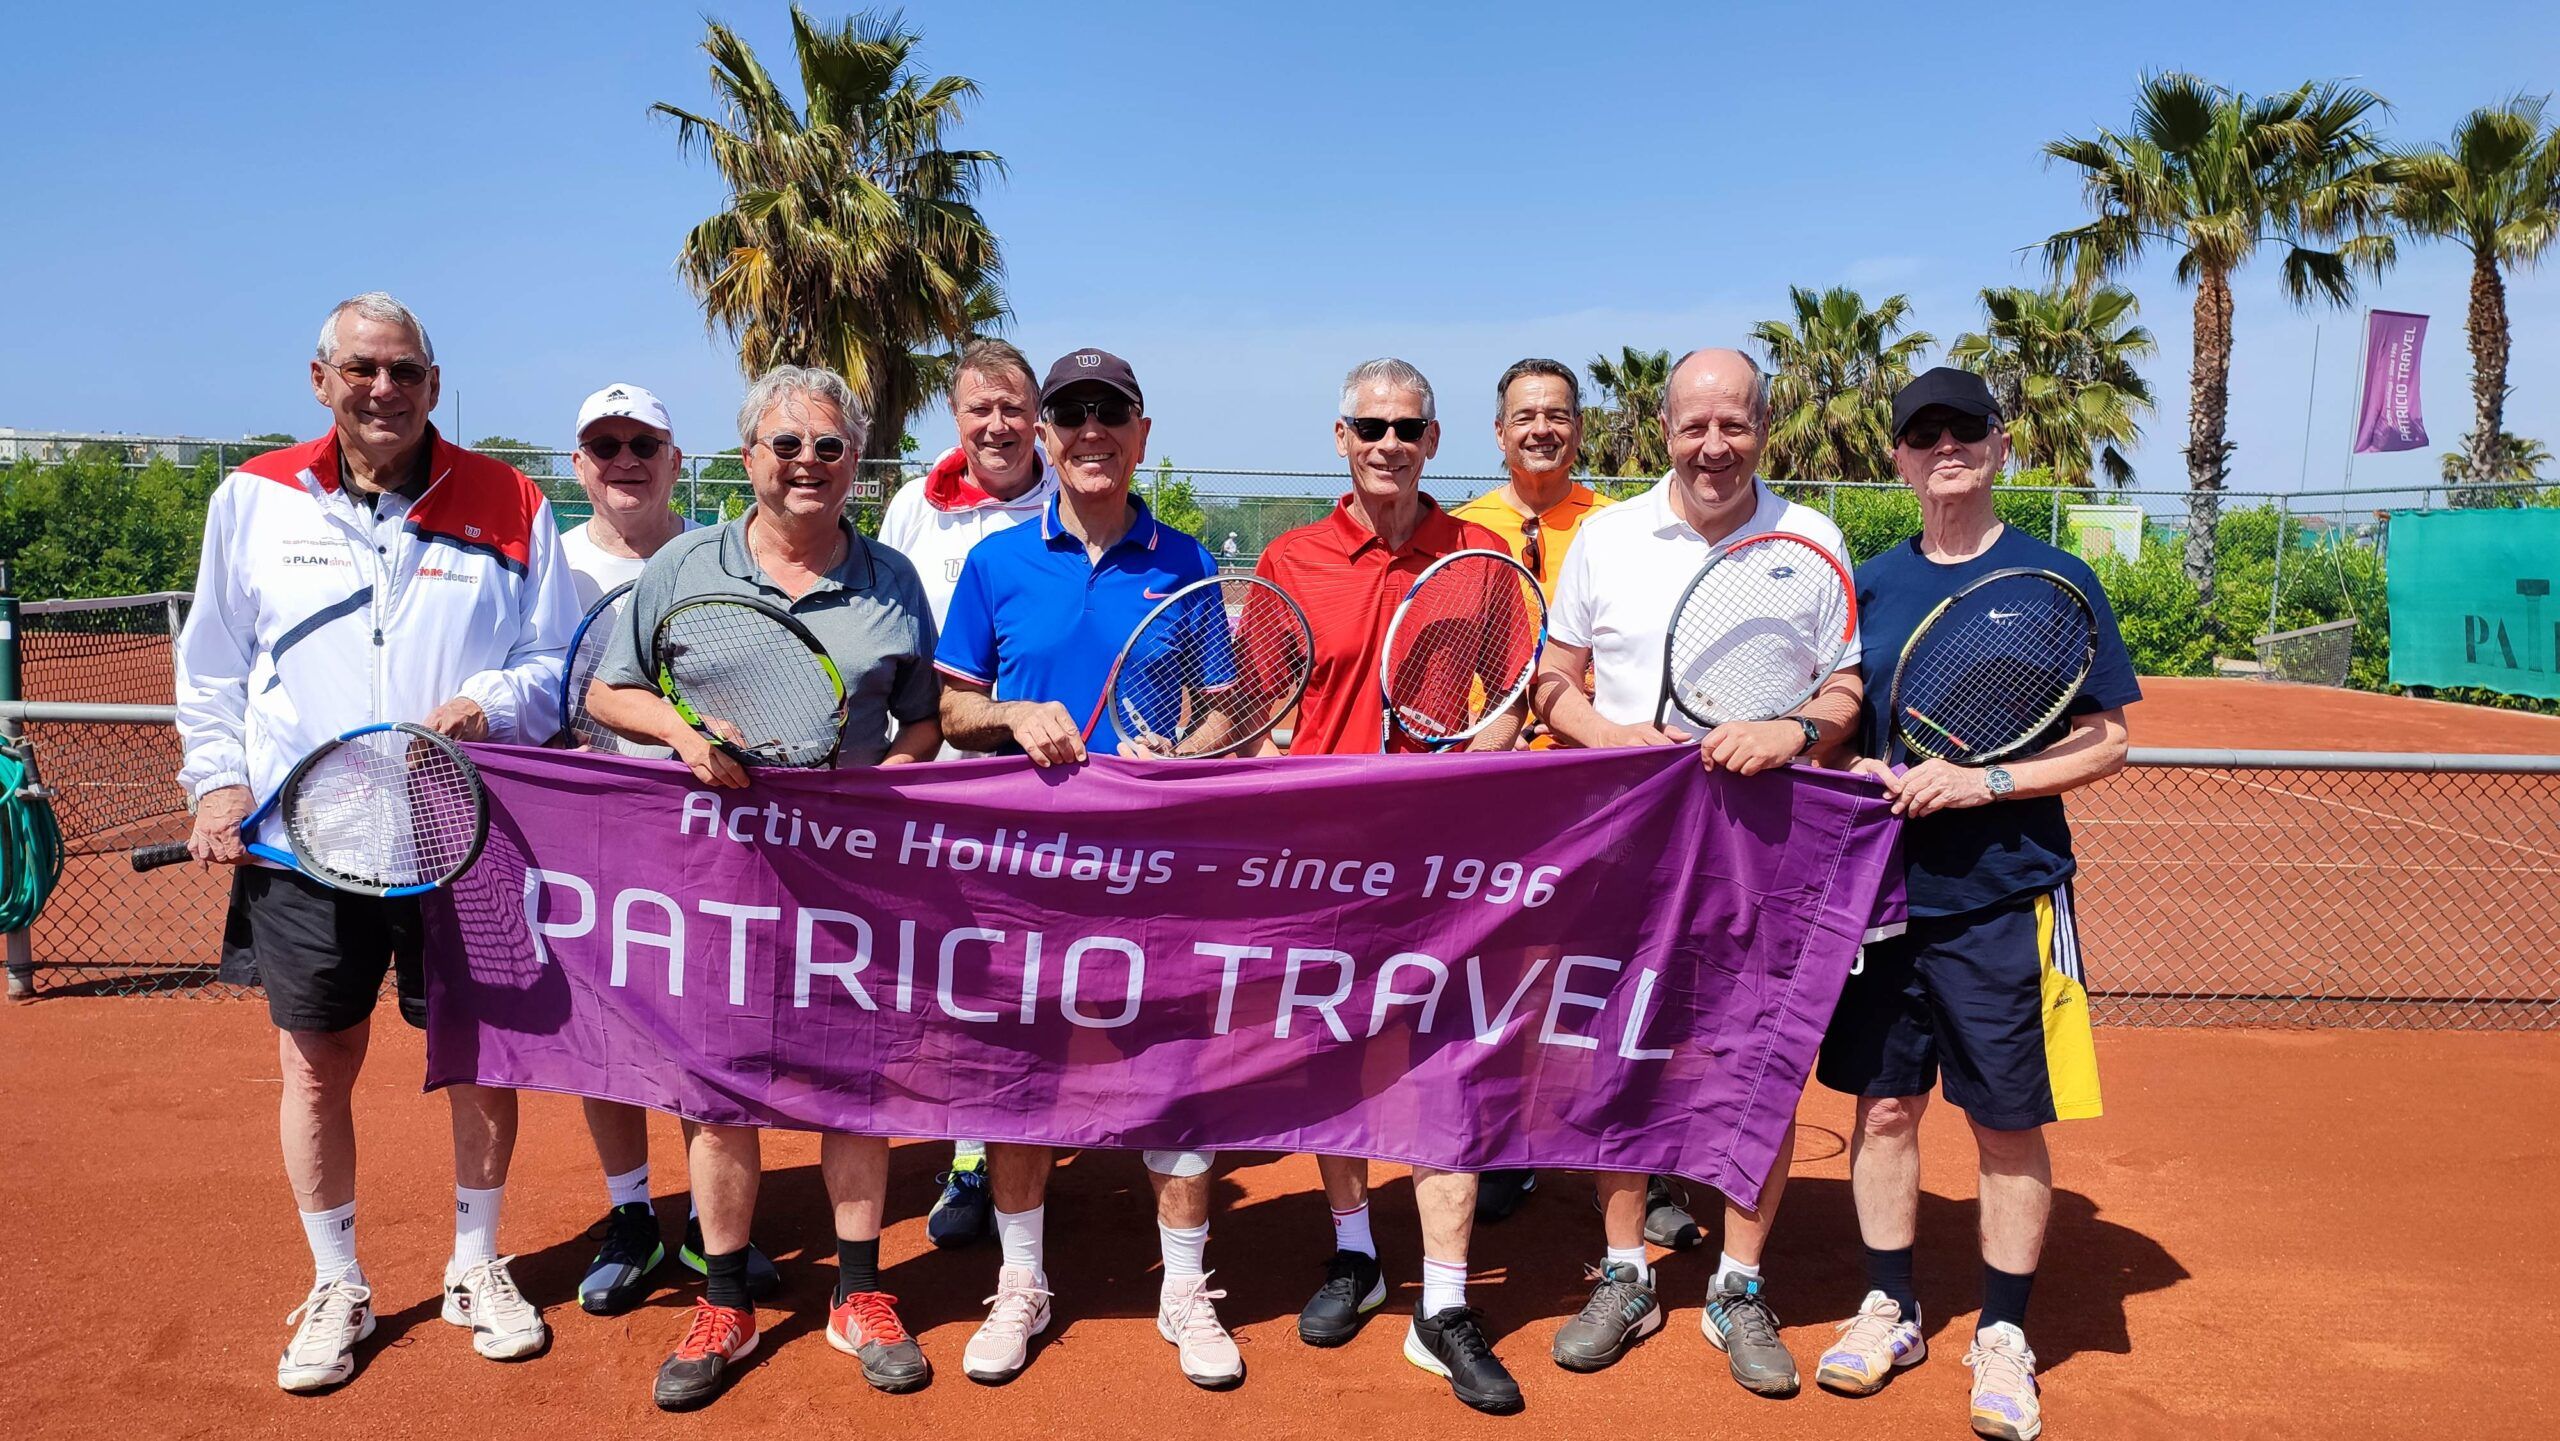 patricio travel tennis